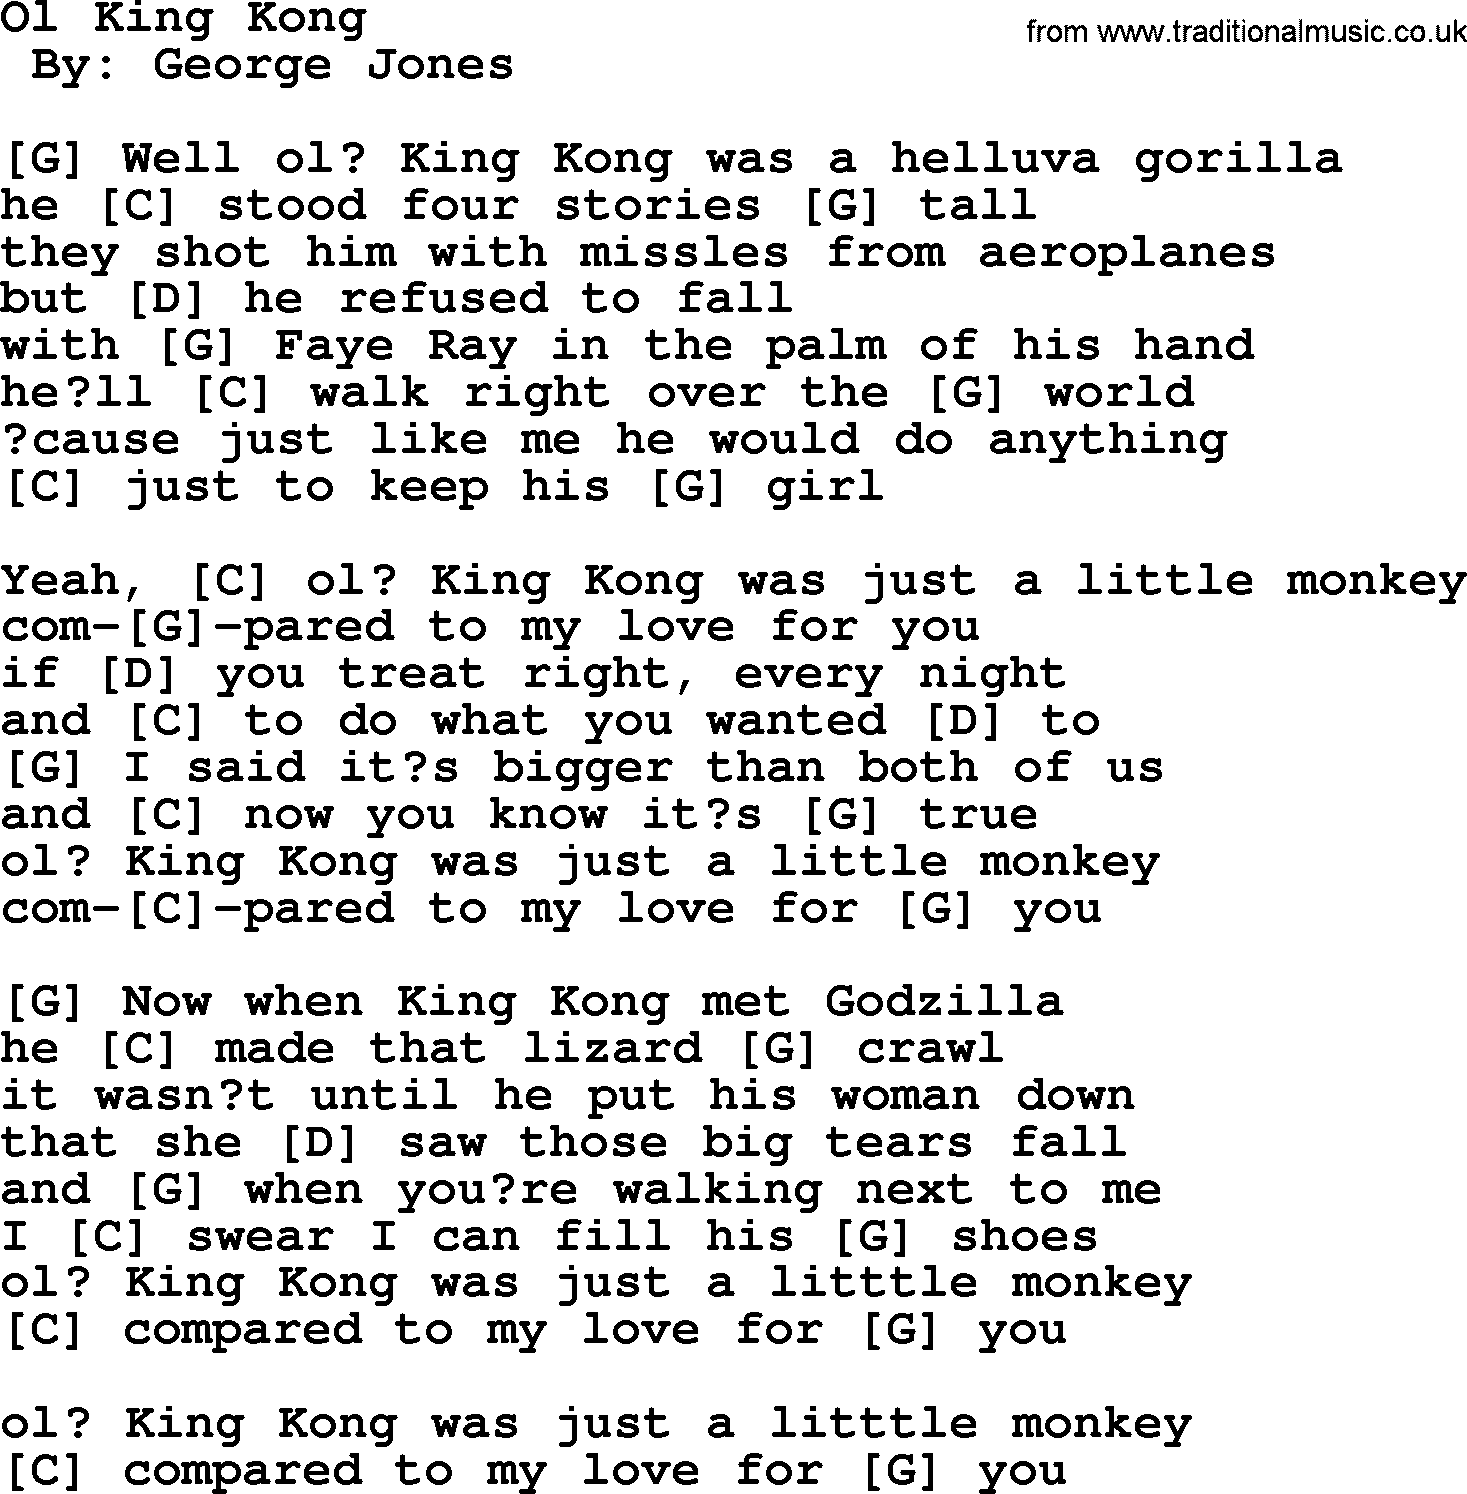 George Jones song: Ol King Kong, lyrics and chords